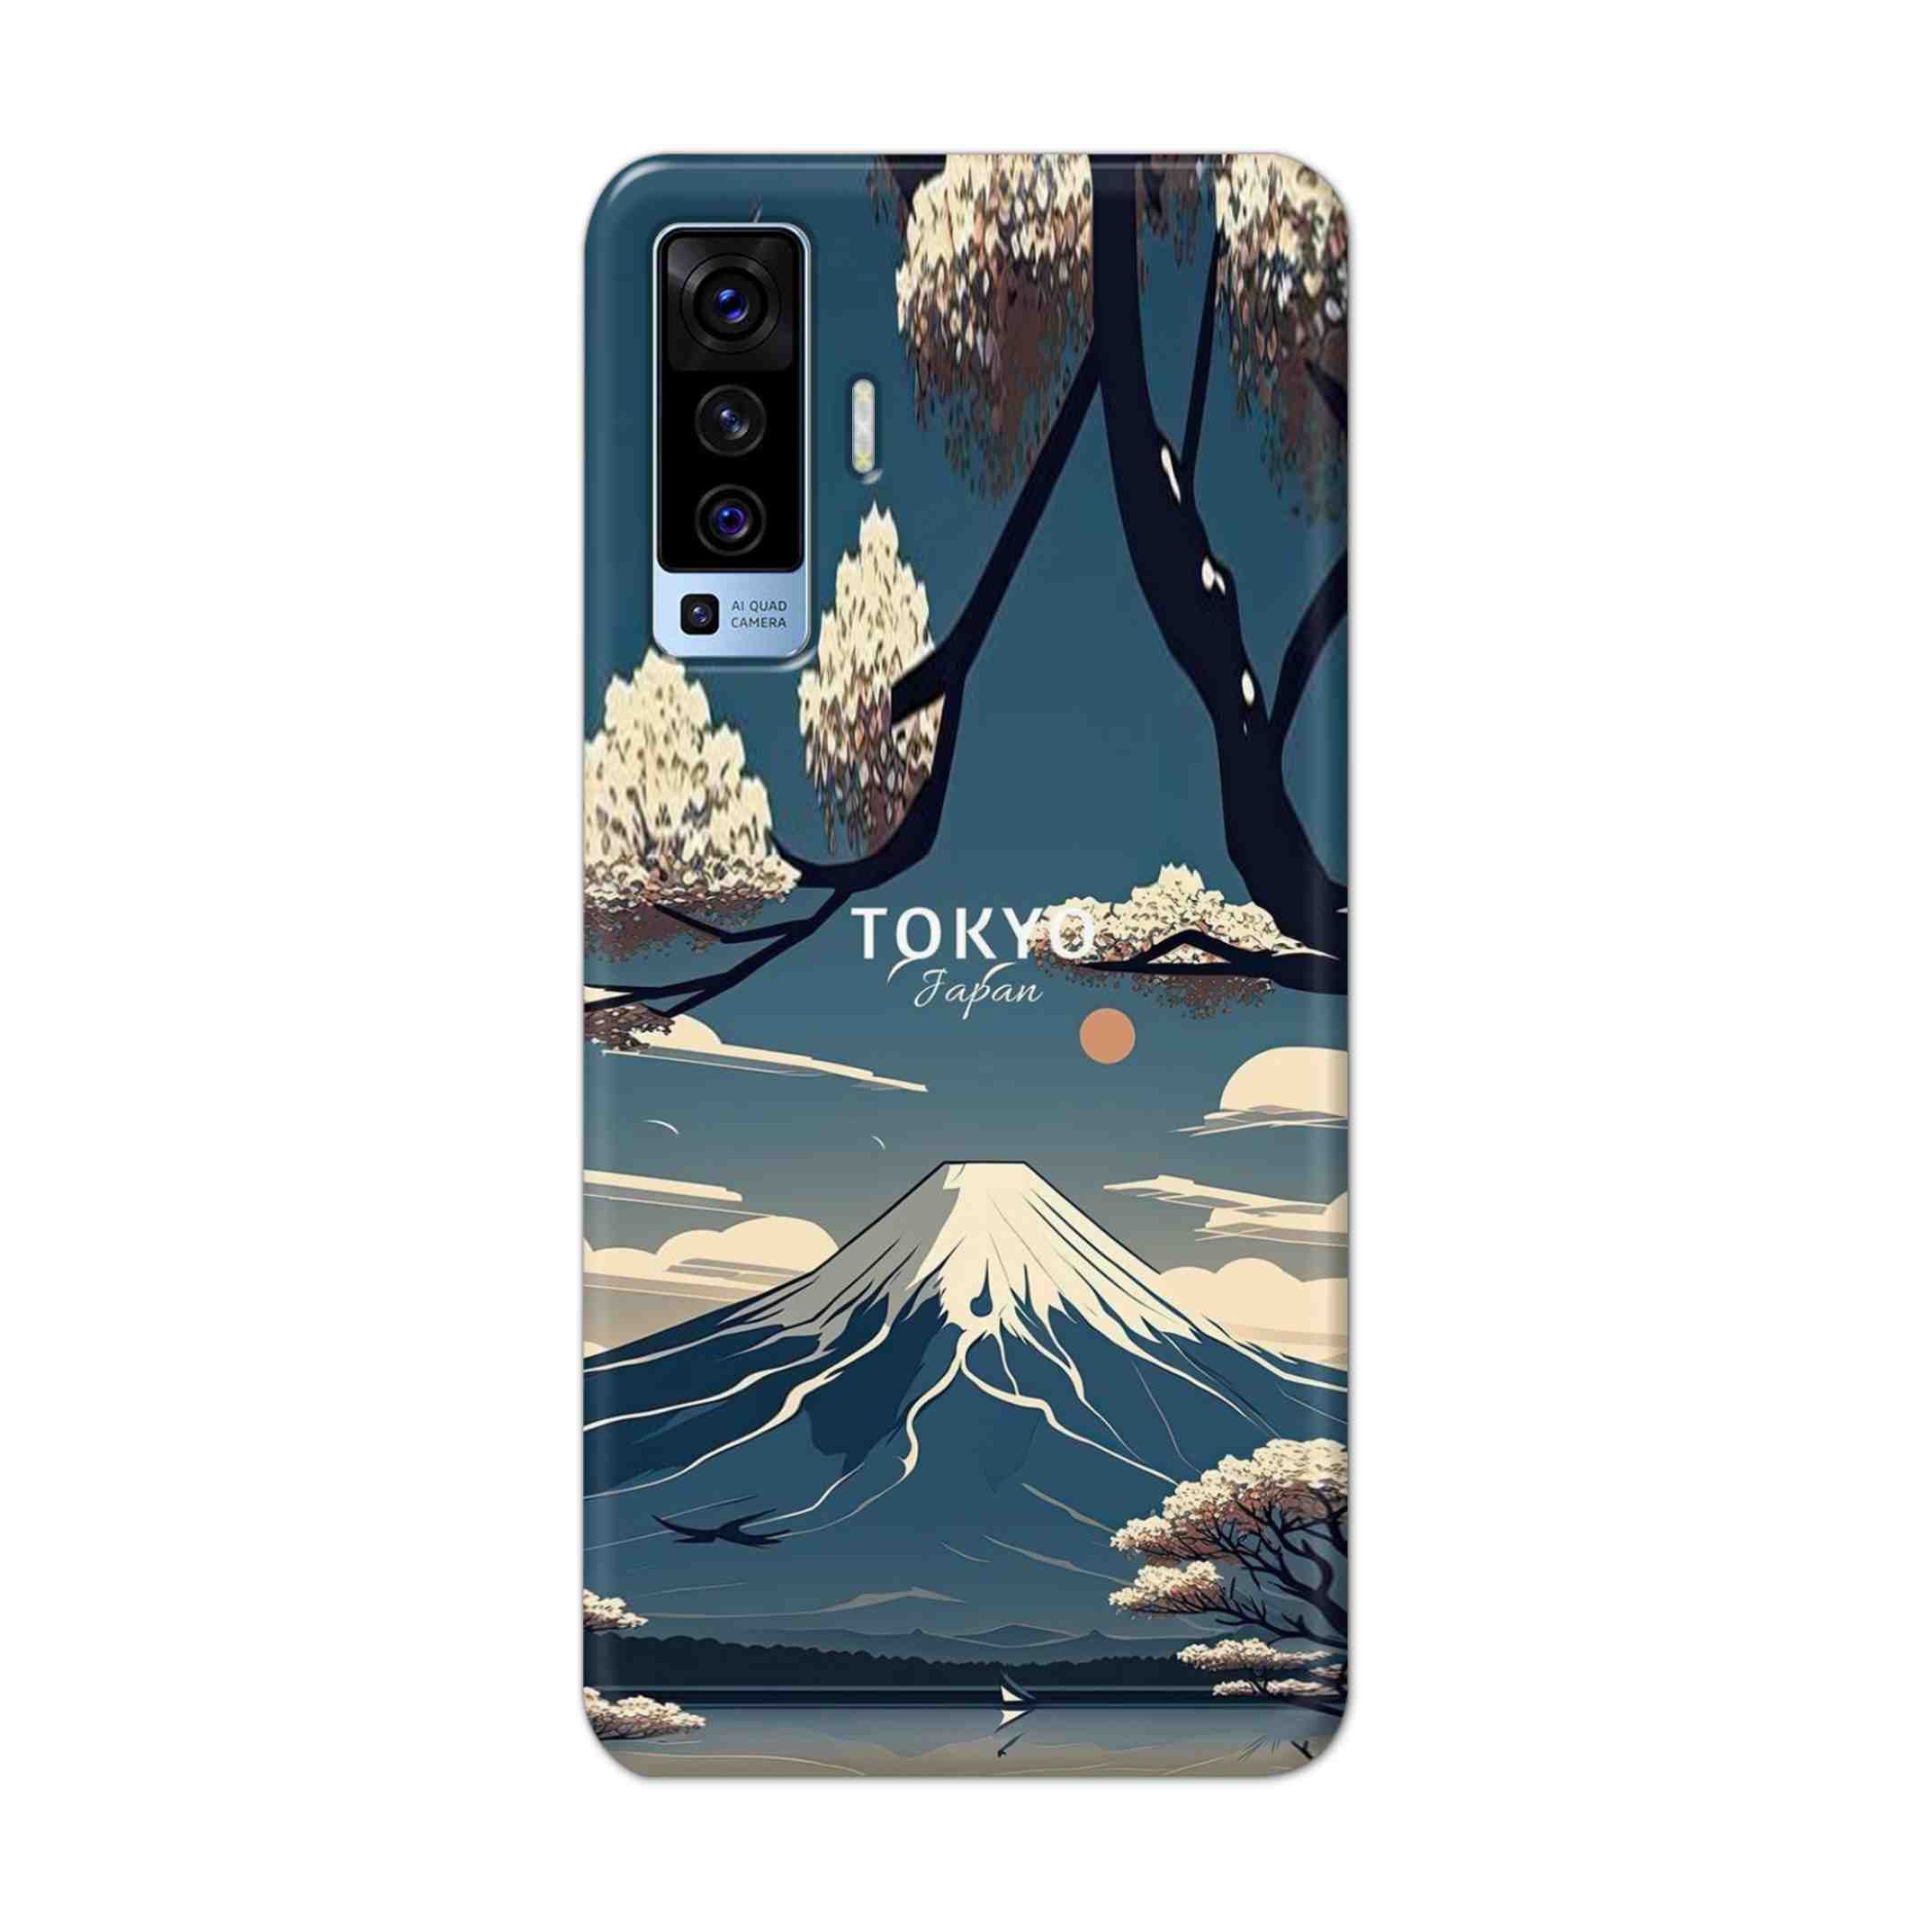 Buy Tokyo Hard Back Mobile Phone Case Cover For Vivo X50 Online